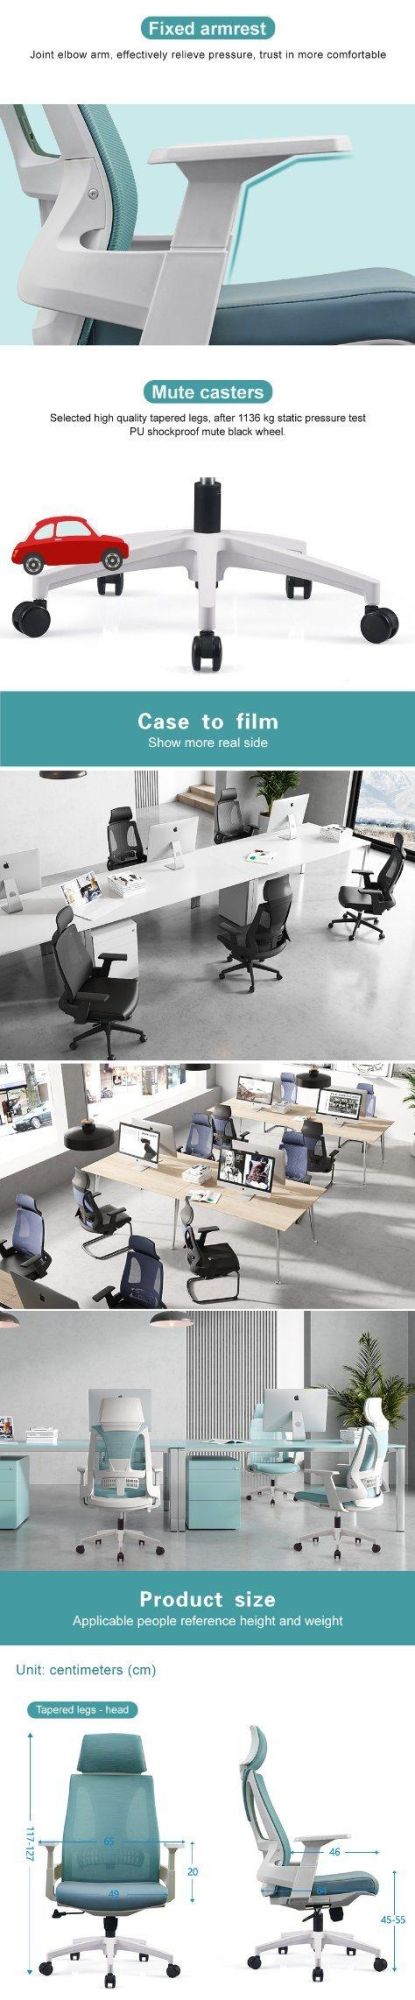 Black Adjustable Armrest Multi-Function High-Back Ergonomic Executive Manager Office Chair